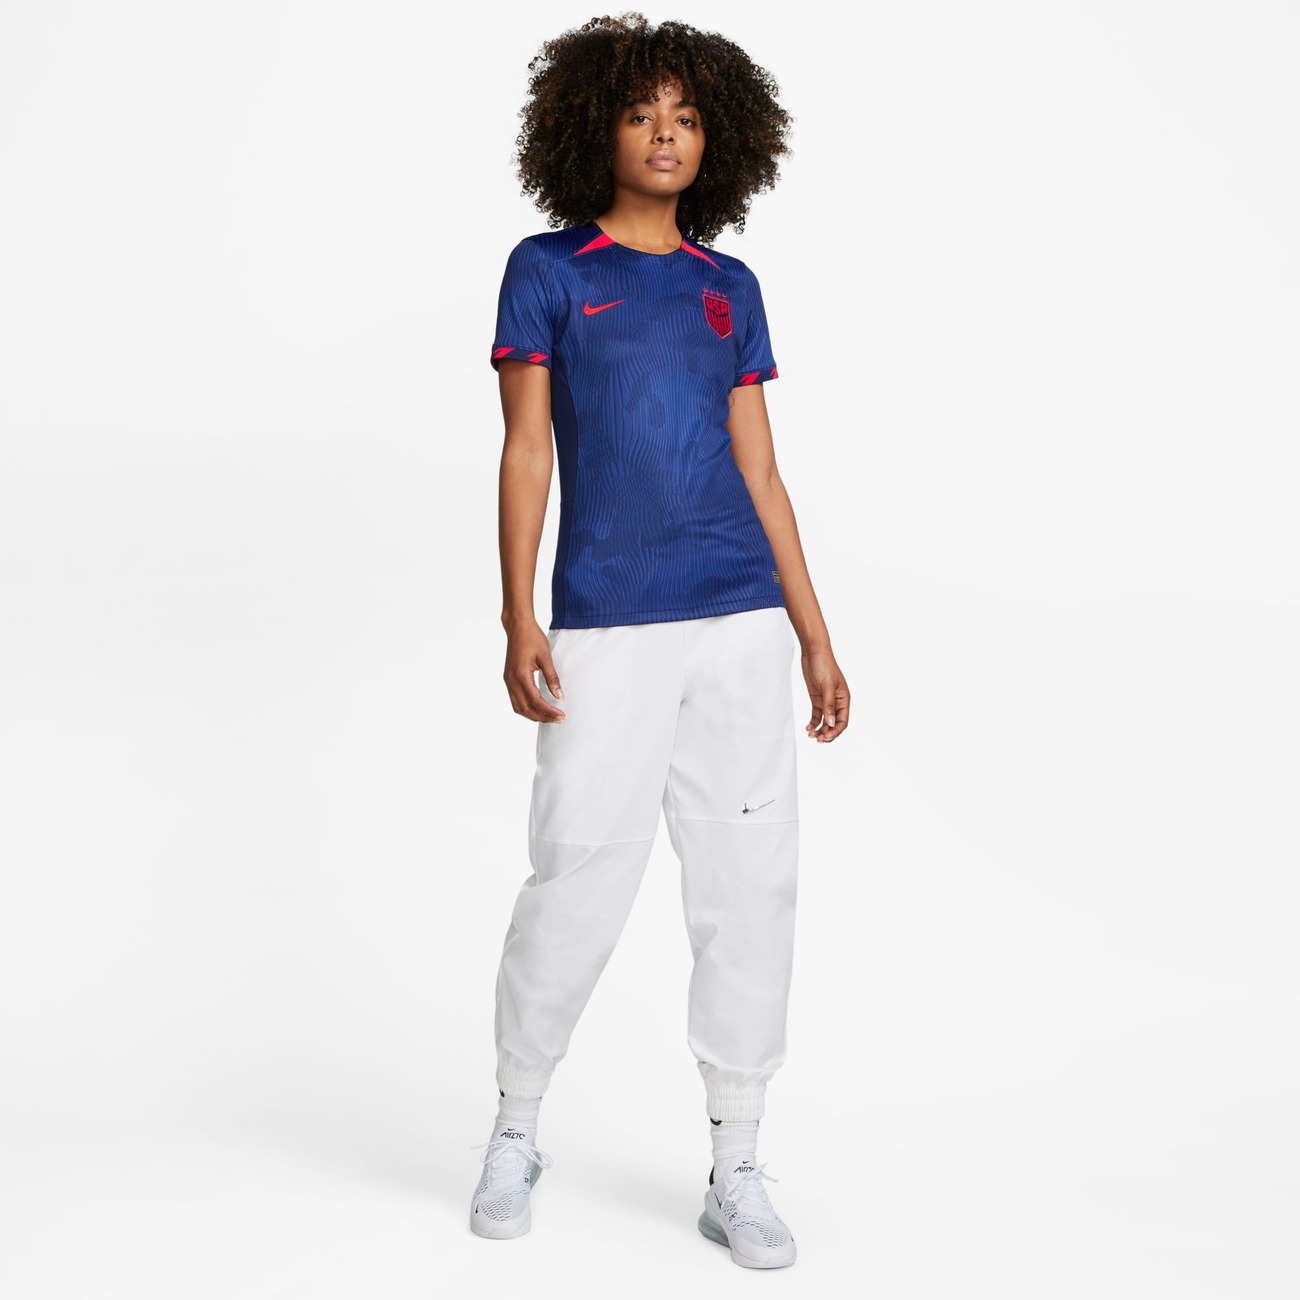 Camiseta Internacional Feminina Nike OF.2 CJ5971-100 Branco